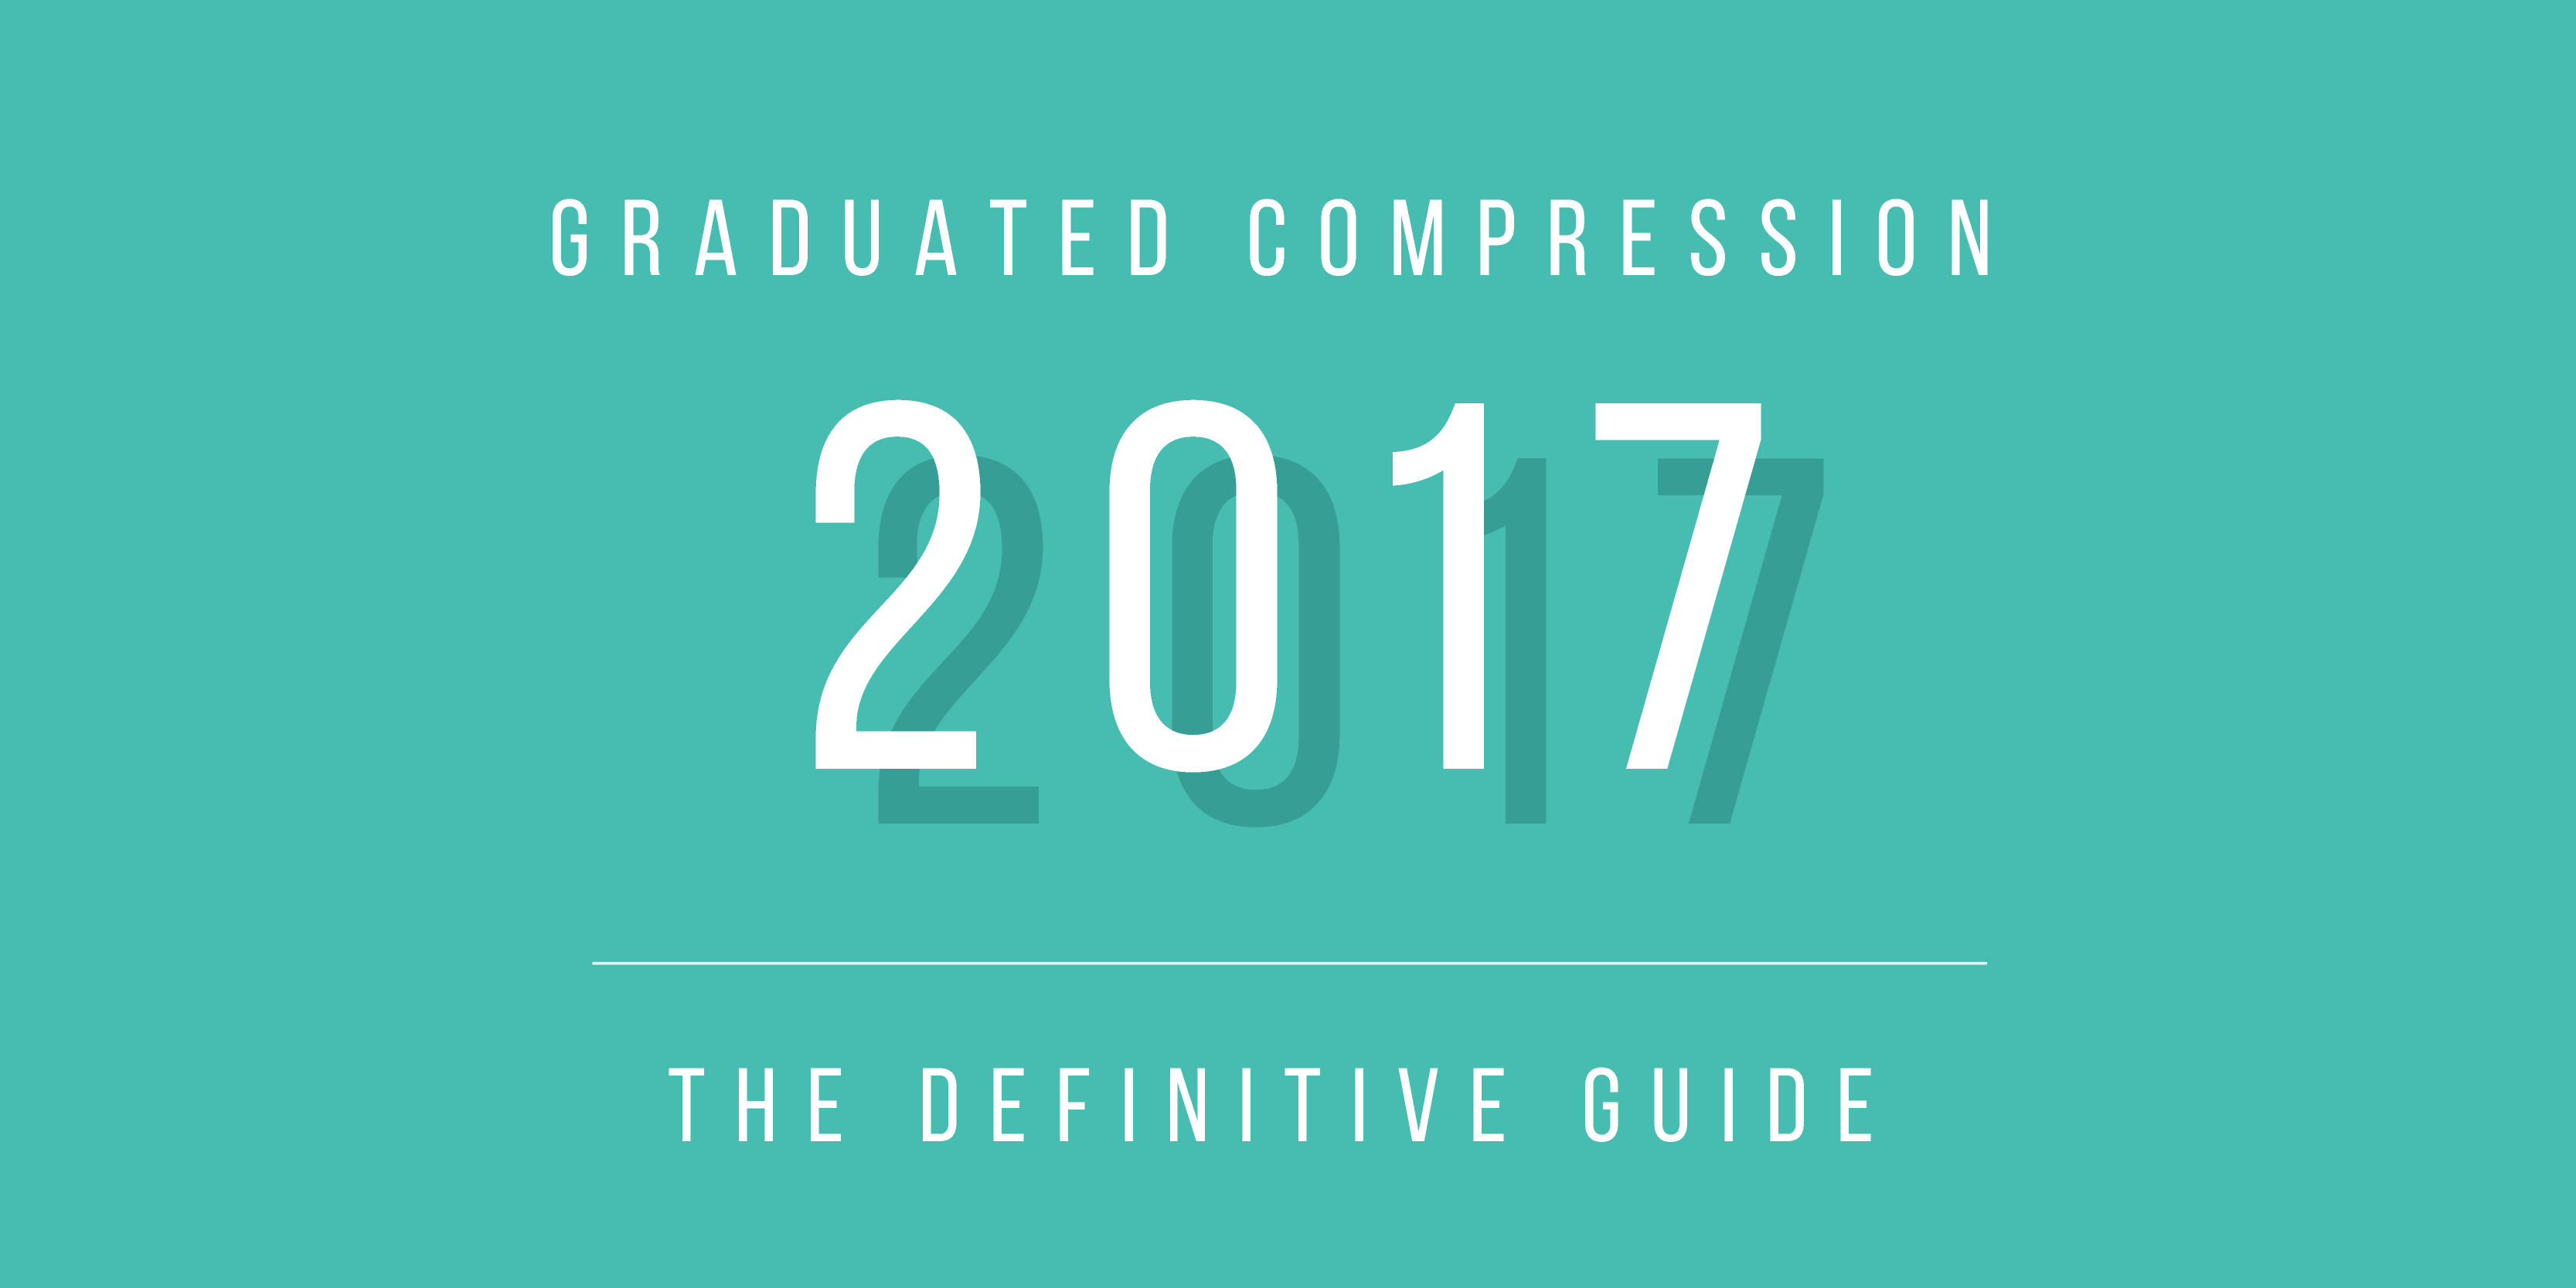 Graduated Compression in 2017 | The Definitive Guide